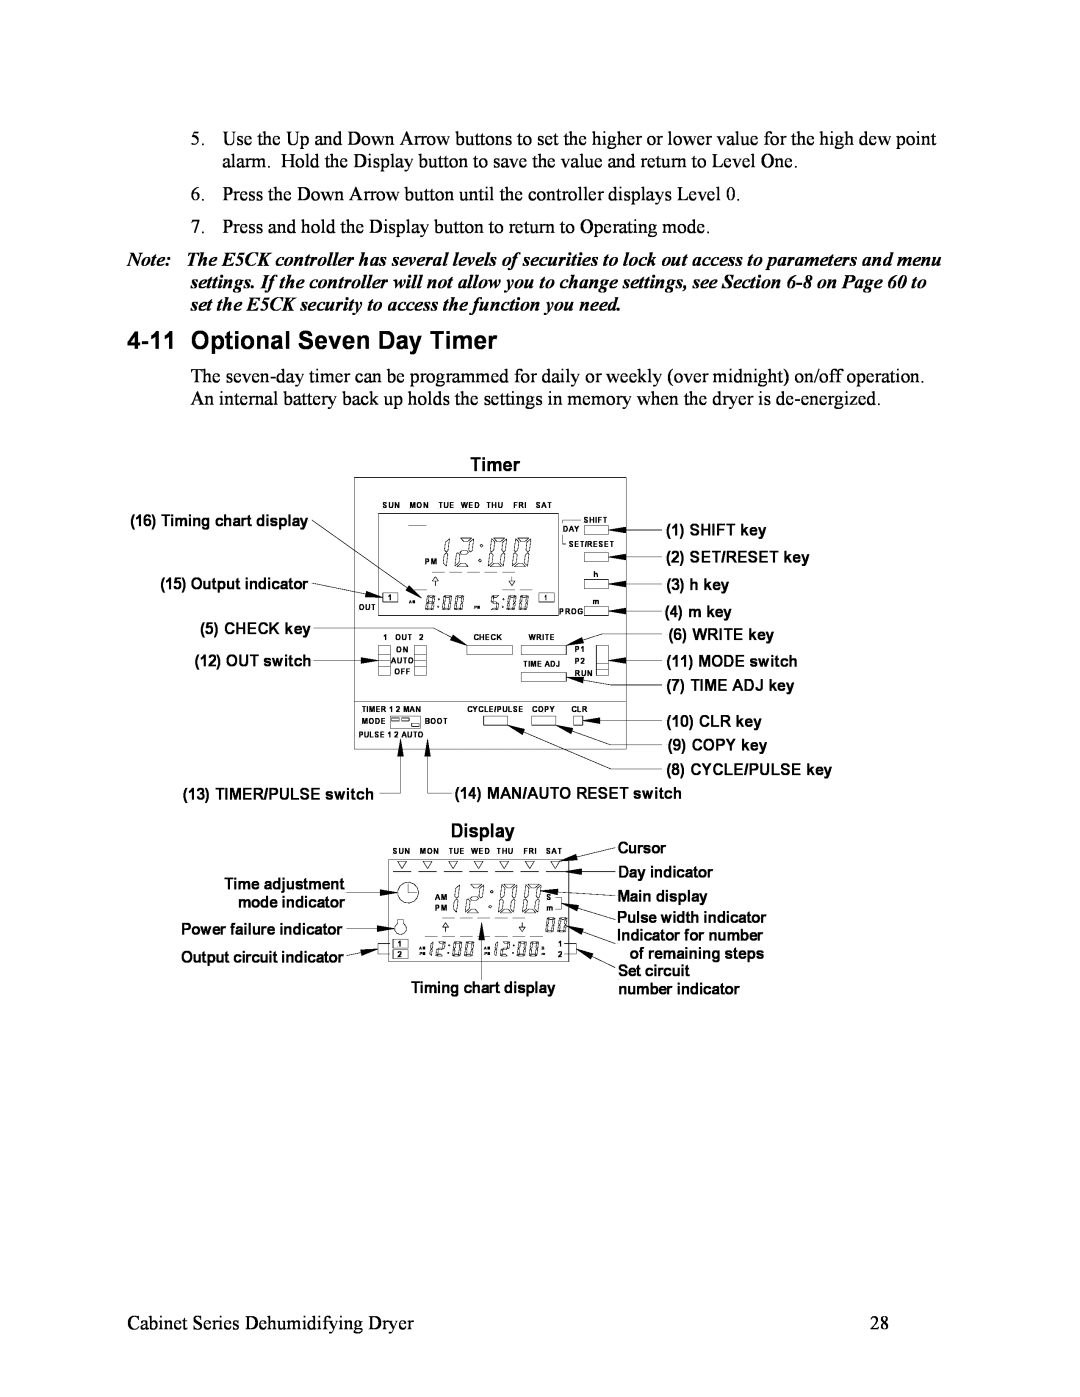 Sterling SDA 150-380, 90-225 CFM installation manual 4-11Optional Seven Day Timer, Display 